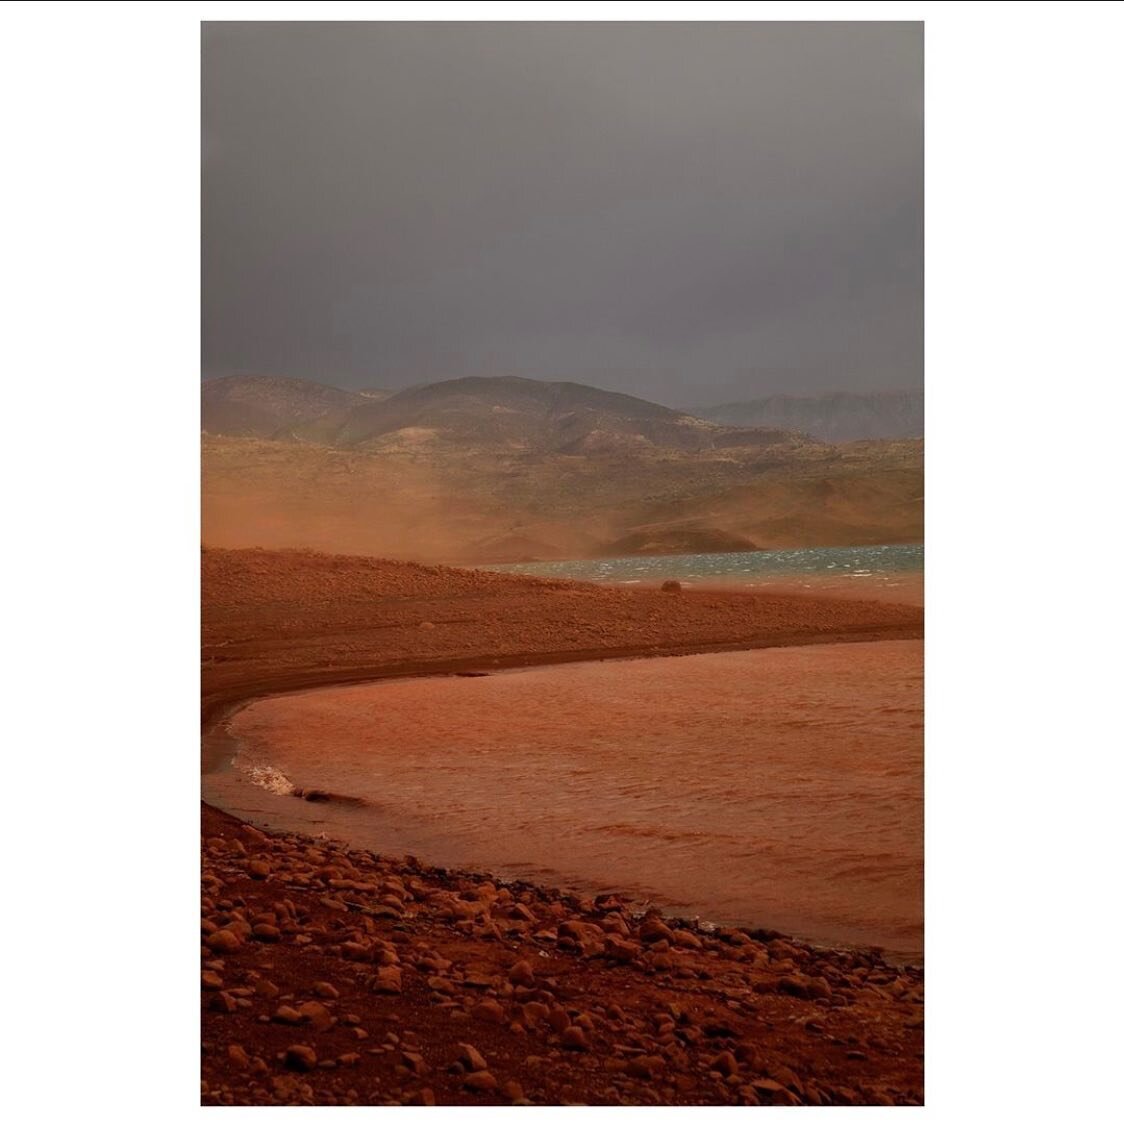 -
PHOTO: Bin El Ouidane. Mid Atlas. Morocco. 2011. 
. 
&copy; #HarryGruyaert/#MagnumPhotos
.
.
#harrygruyaert #documentary #photography #photojournalism #magnum #magnumphotos #magnumphotosphotographers #magnumphotoskoreaagent #europhotos #해리그뤼아트 #다큐멘